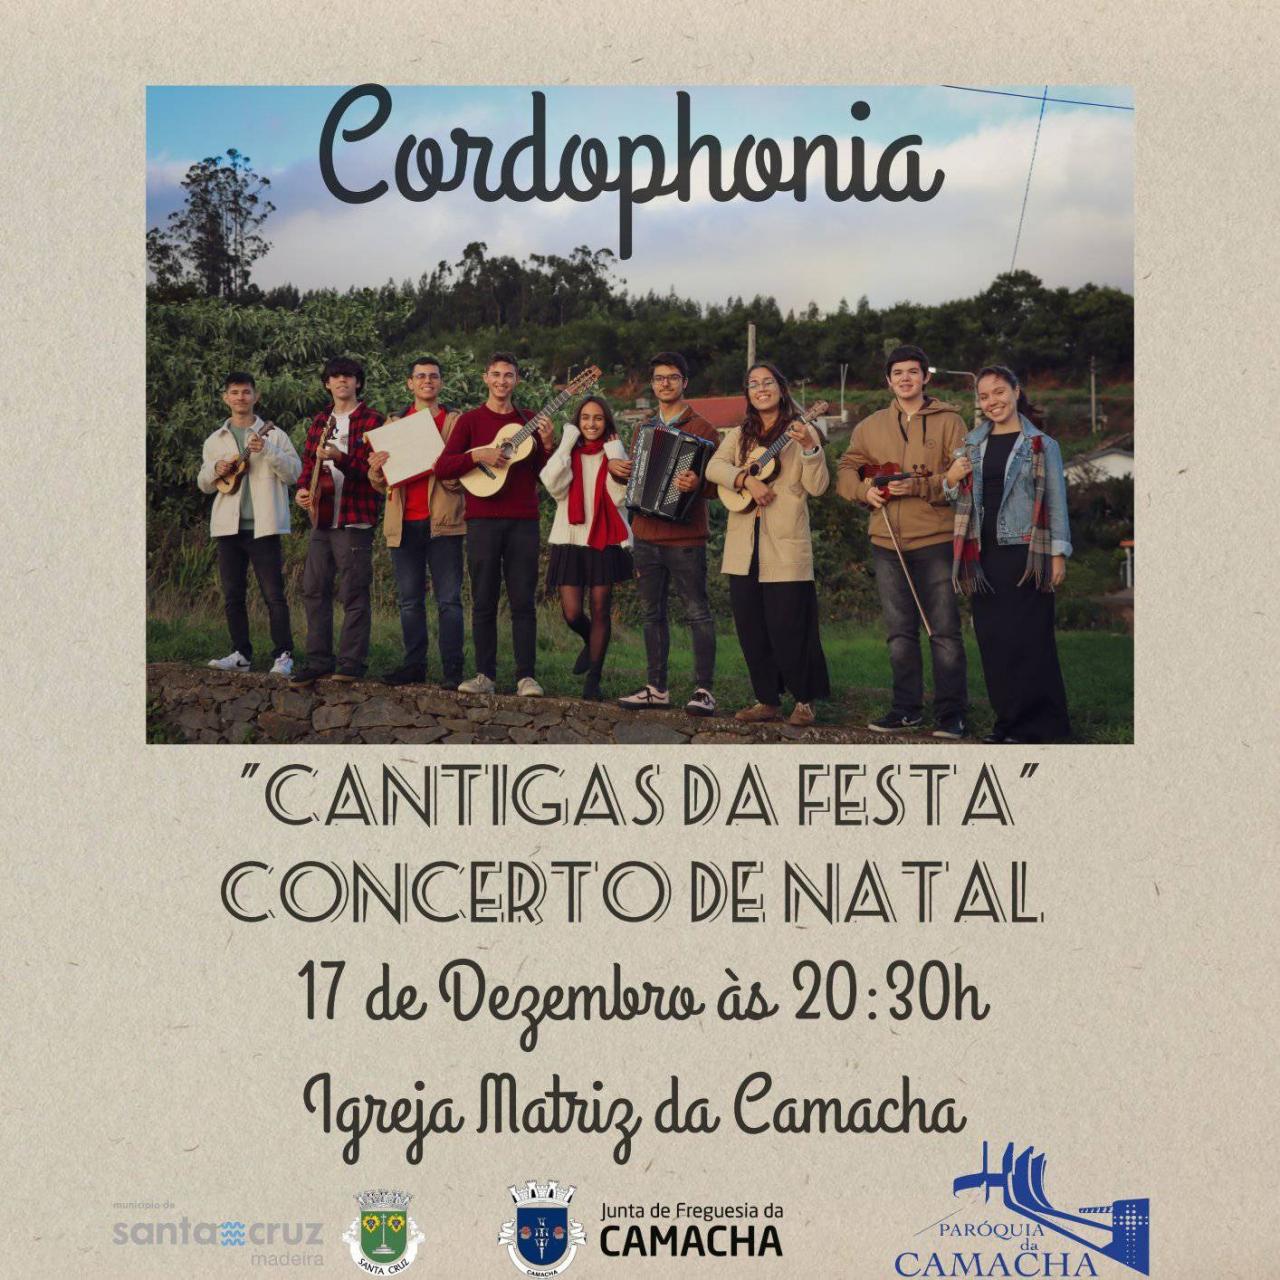 "Cantigas da Festa" Concerto de Natal - Cordophonia